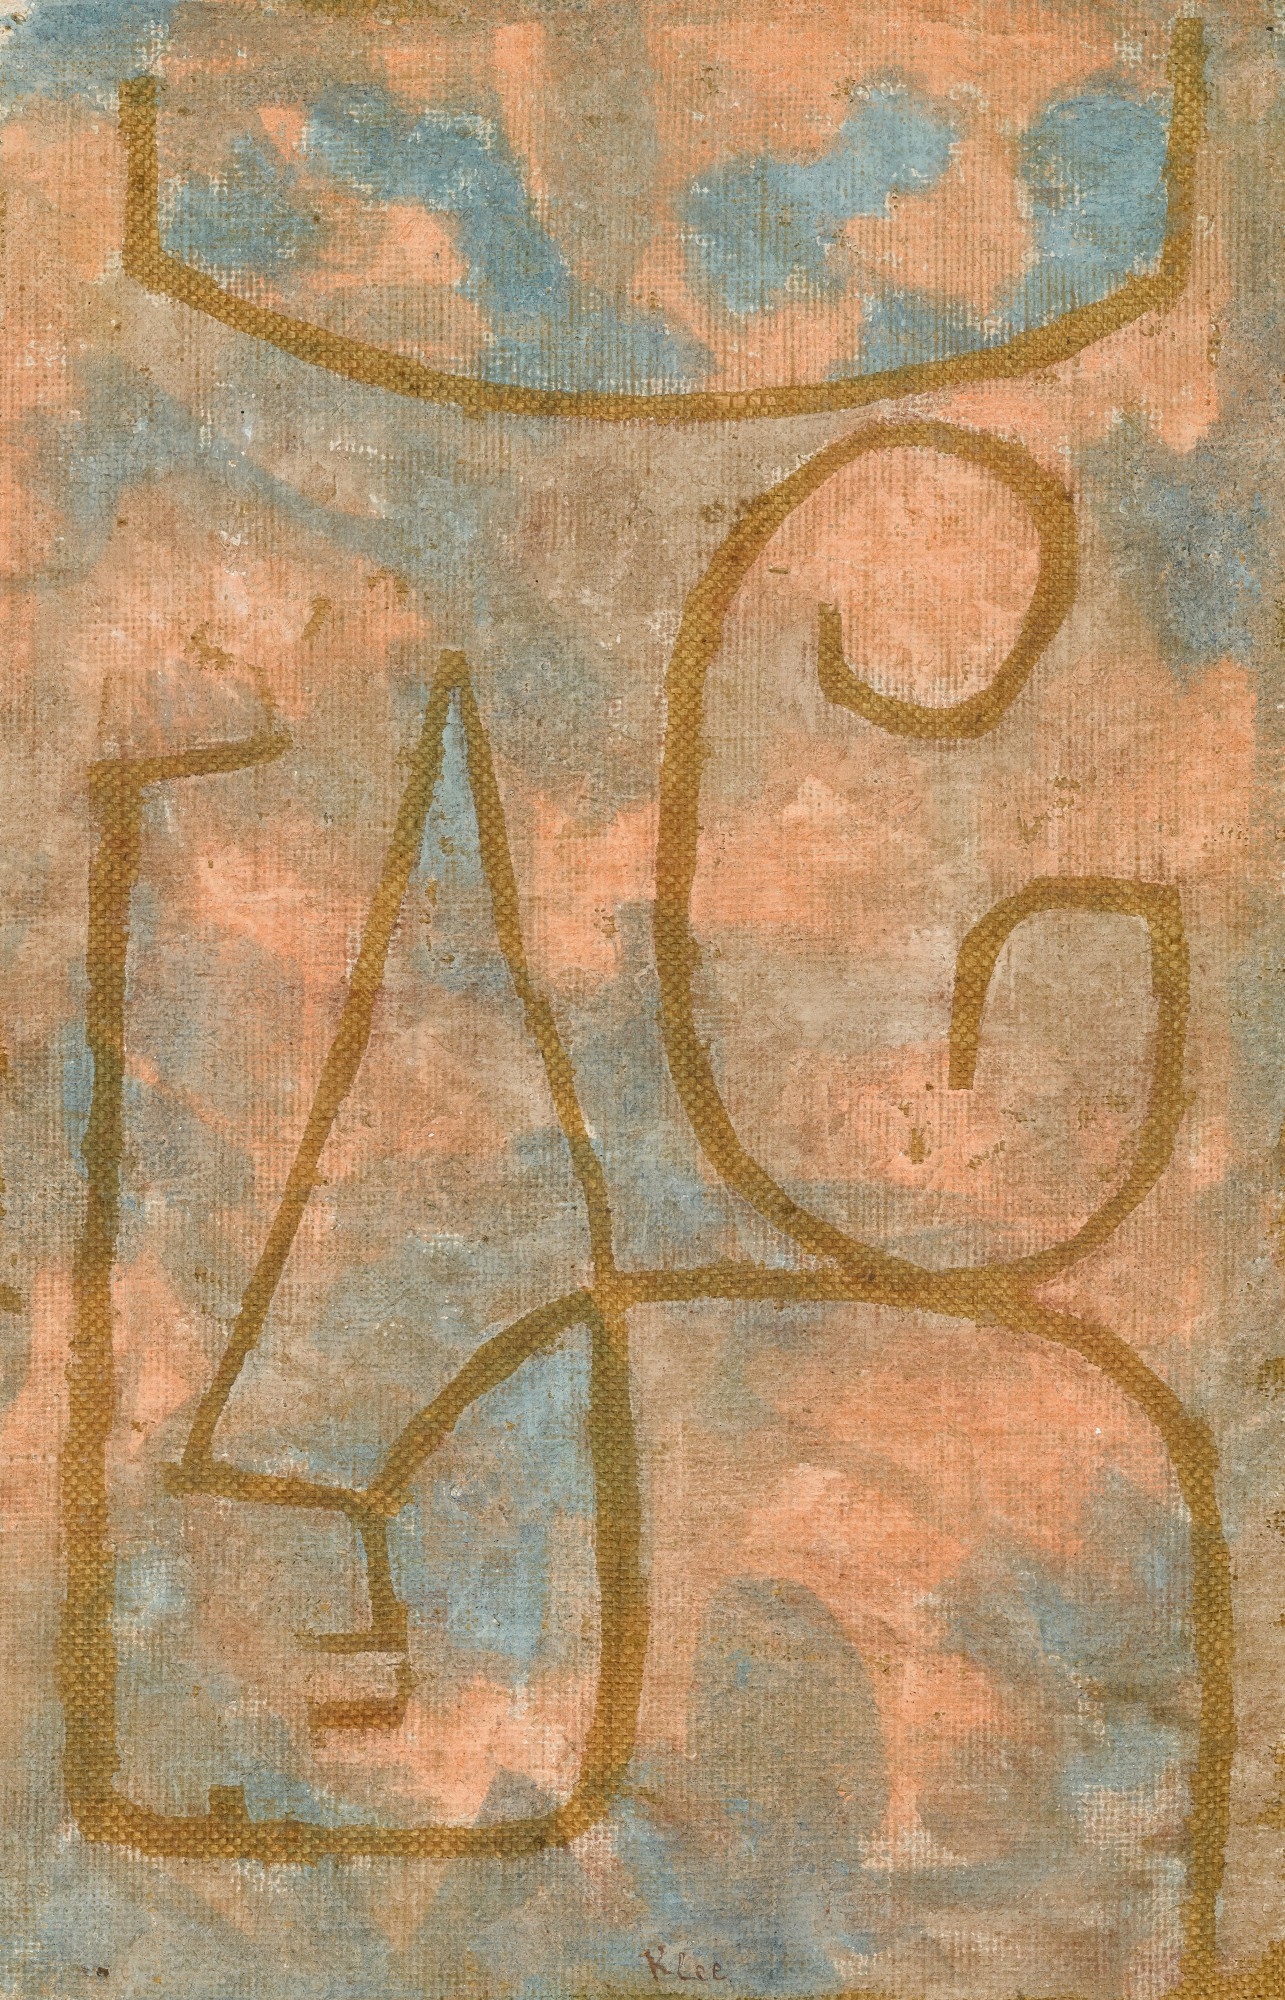 Artwork by Paul Klee, Milderung (Softening), Made of watercolour on primed burlap